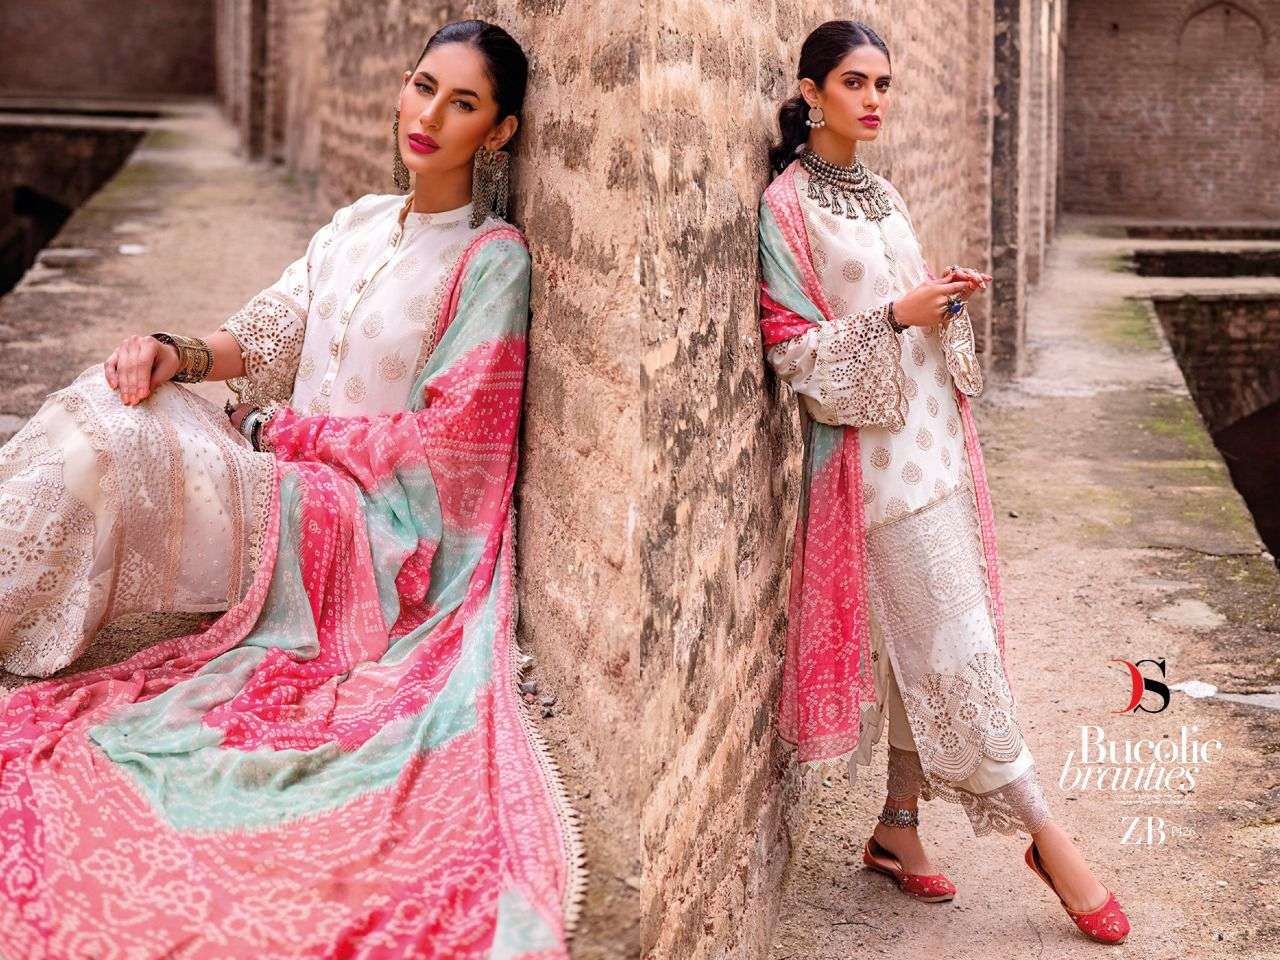  deepsy suits zinab 1421-1426 series pakistani designer salwar kameez manufacturer india